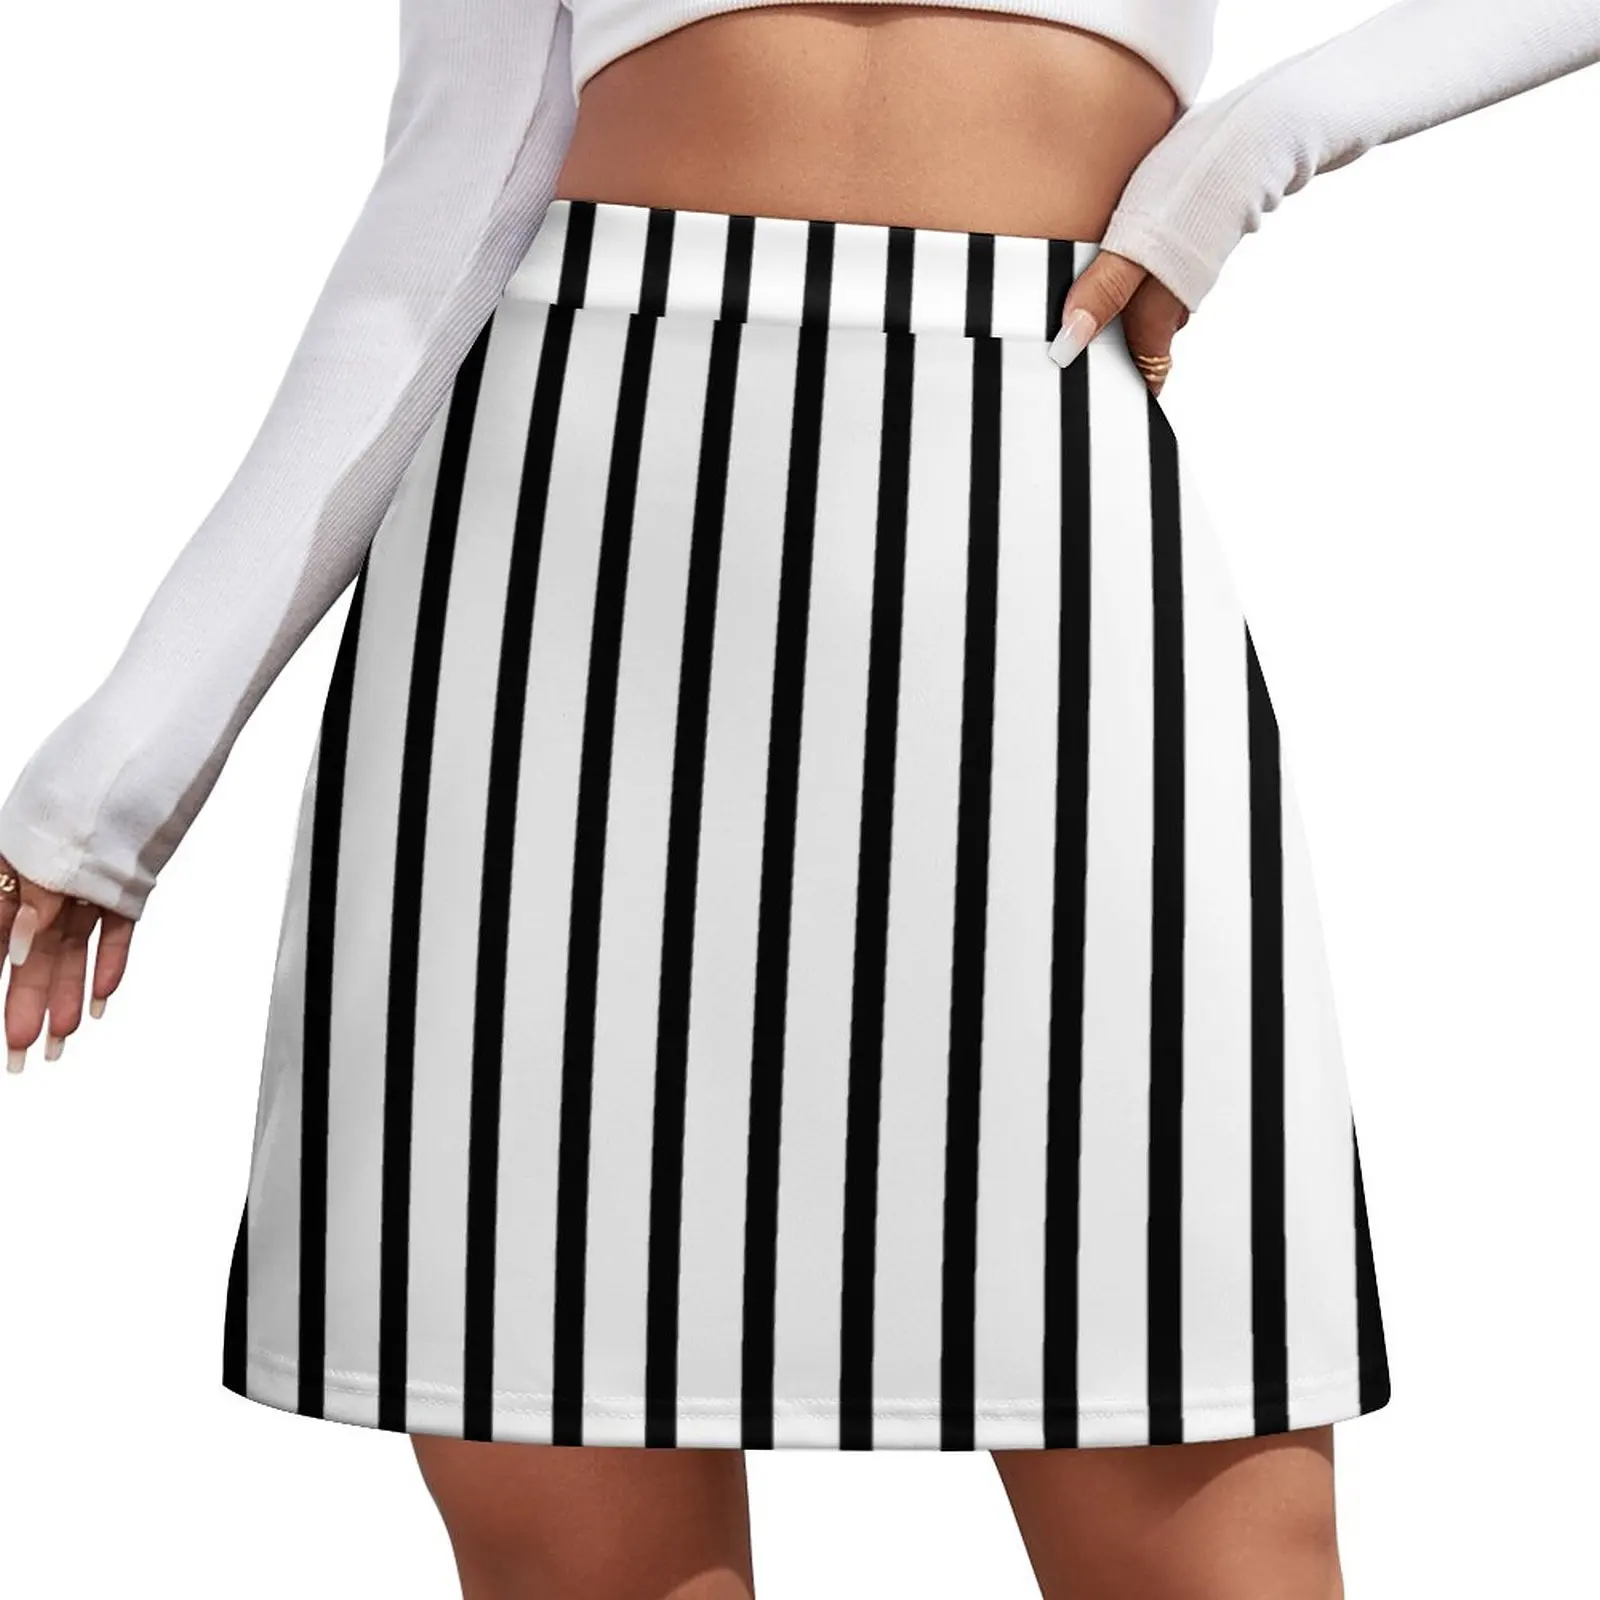 Thin Black White Stripes Miniskirt Mini Skirt korean ladies summer cute skirt fashion